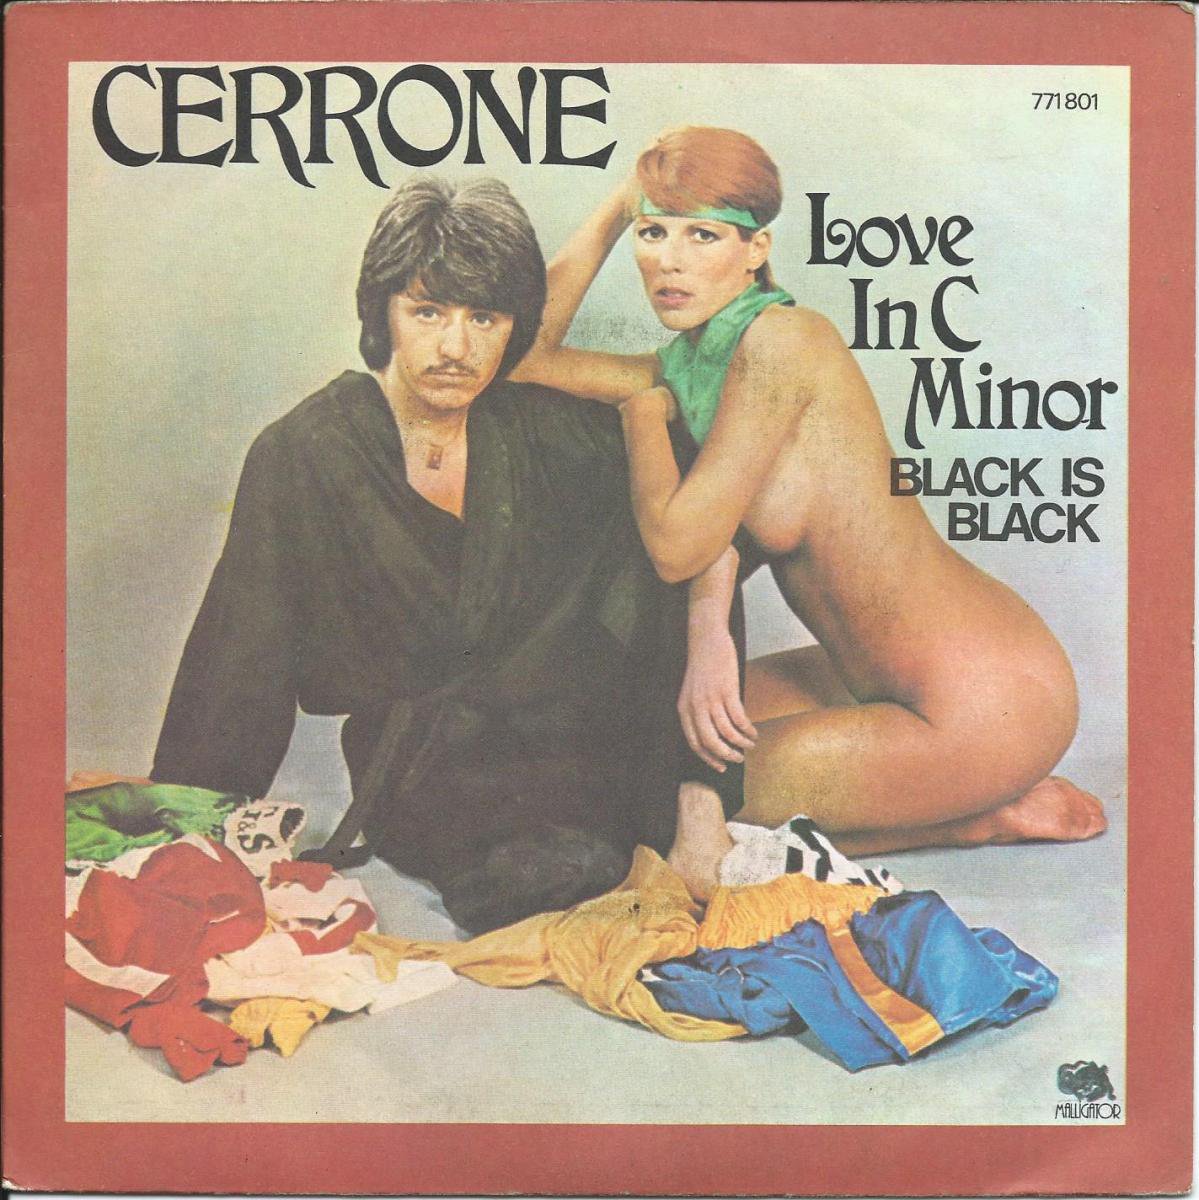 CERRONE / LOVE IN C MINOR (7